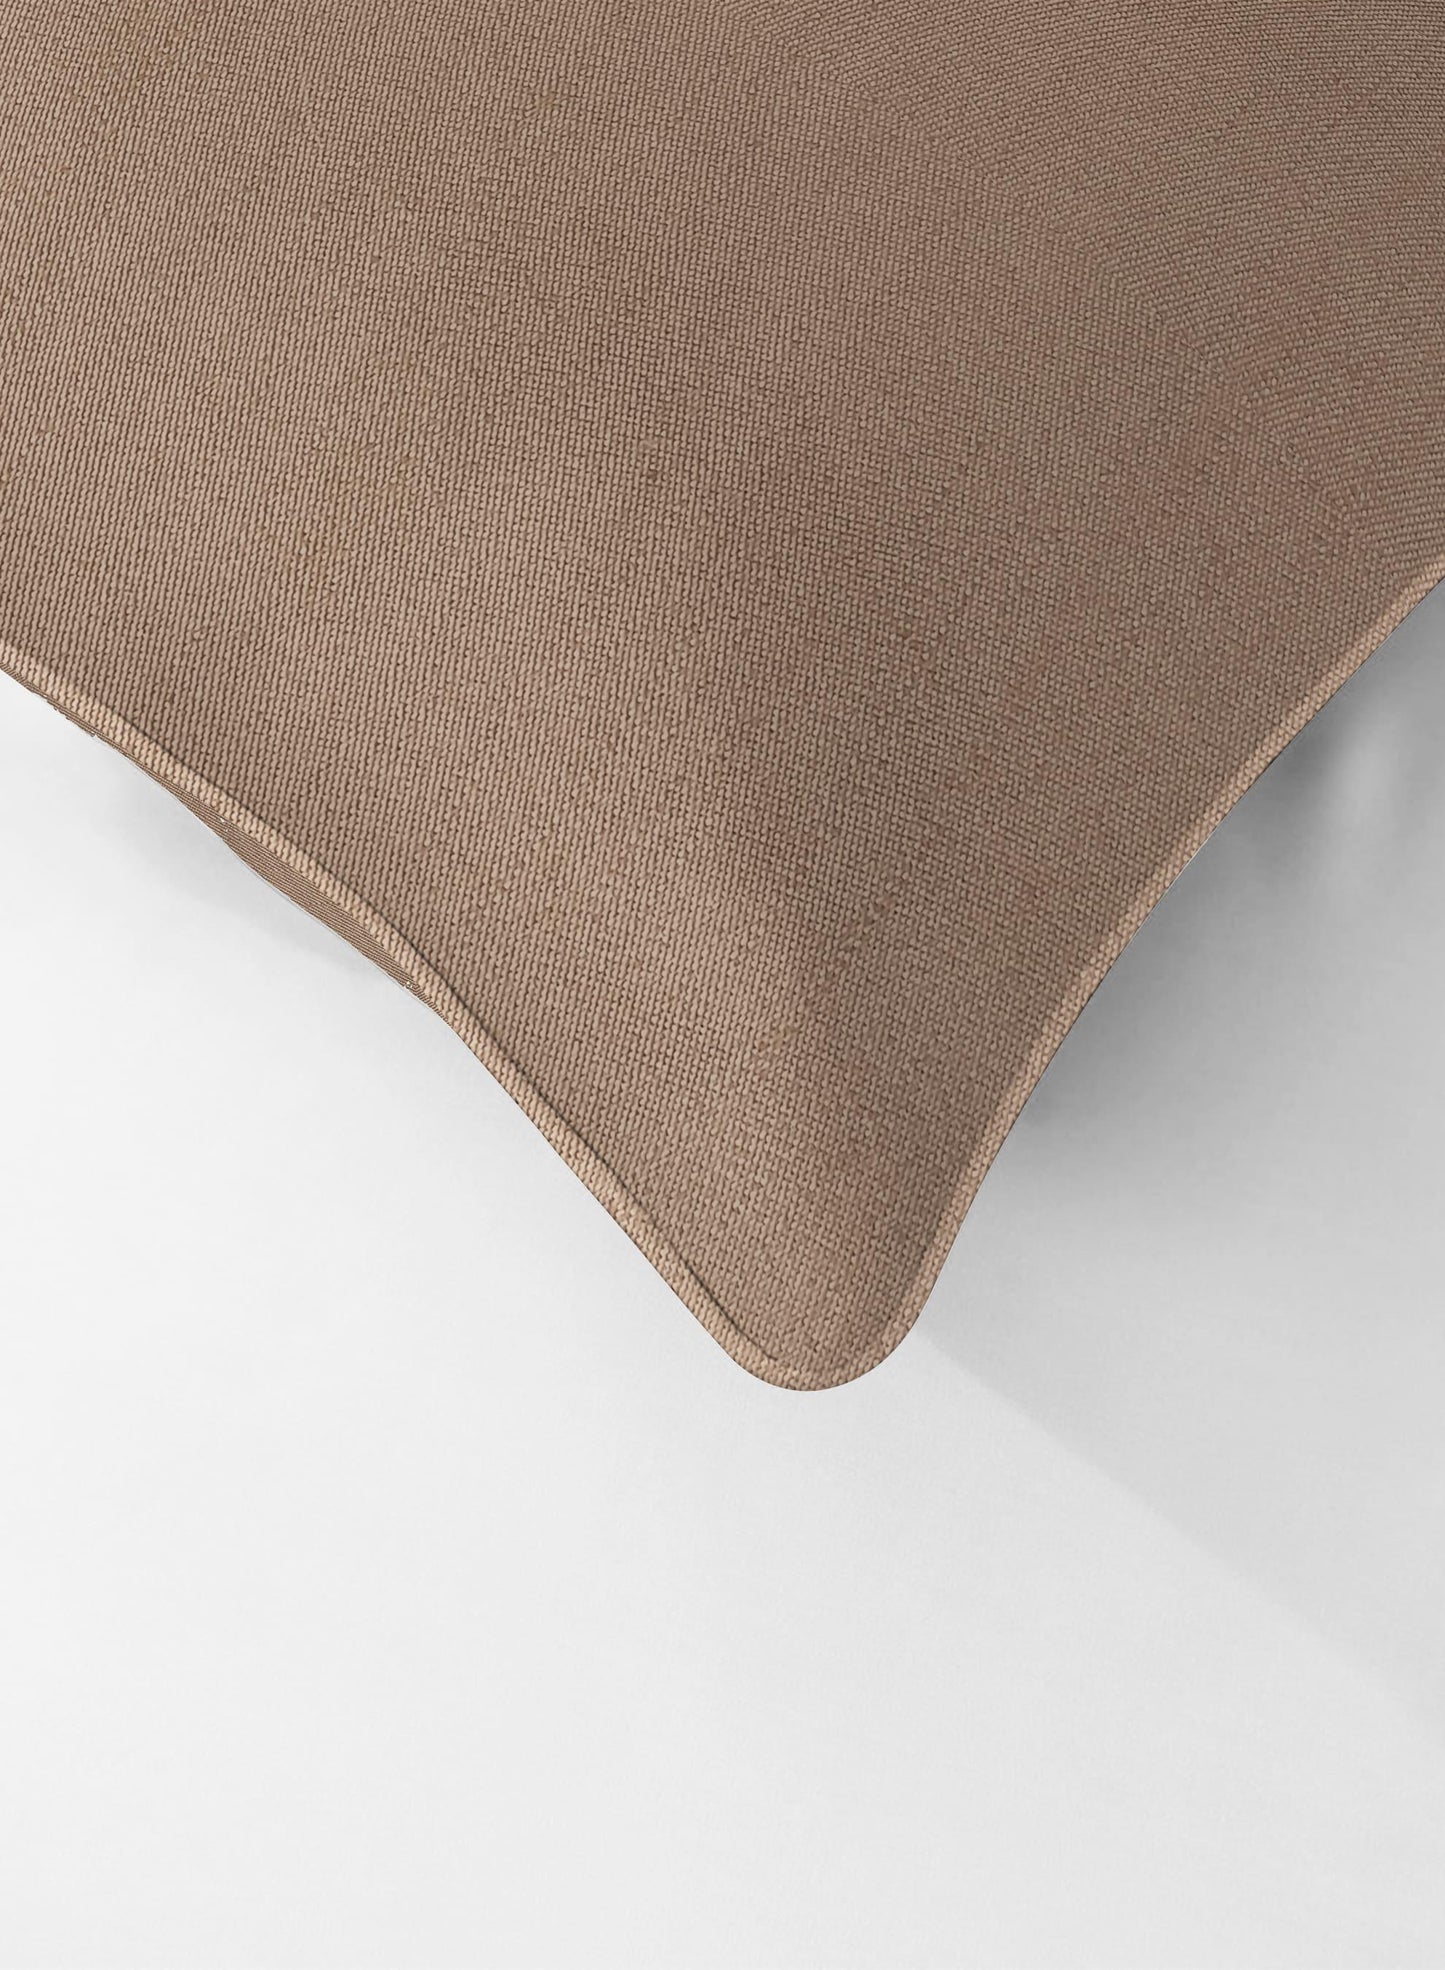 Lyon Cushion Cover | Brown - Home Crayons